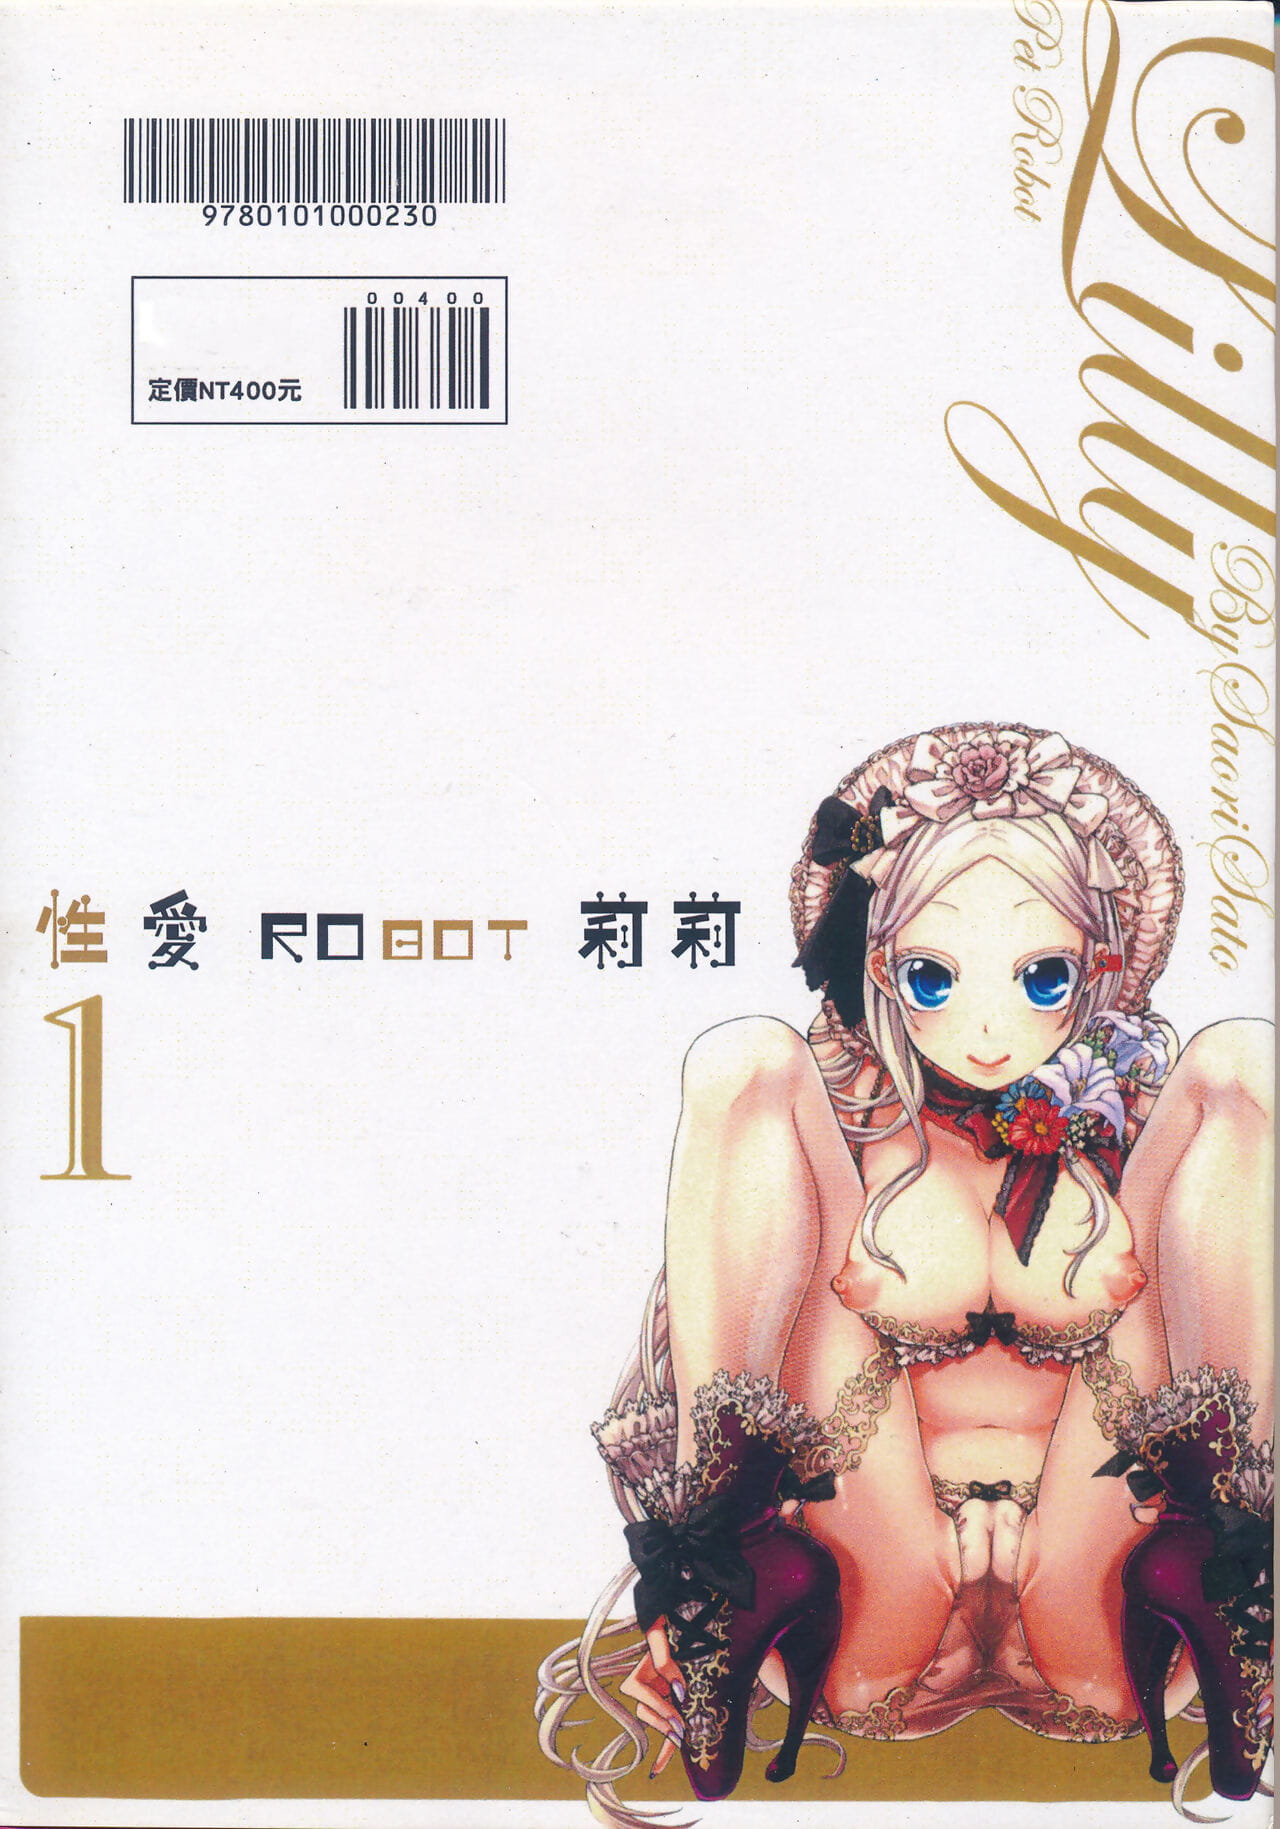 Sato Саори Aigan robot Lilly PAT robot Lilly vol. 1 性愛robot 莉莉 vol. 1 Chiński część 7